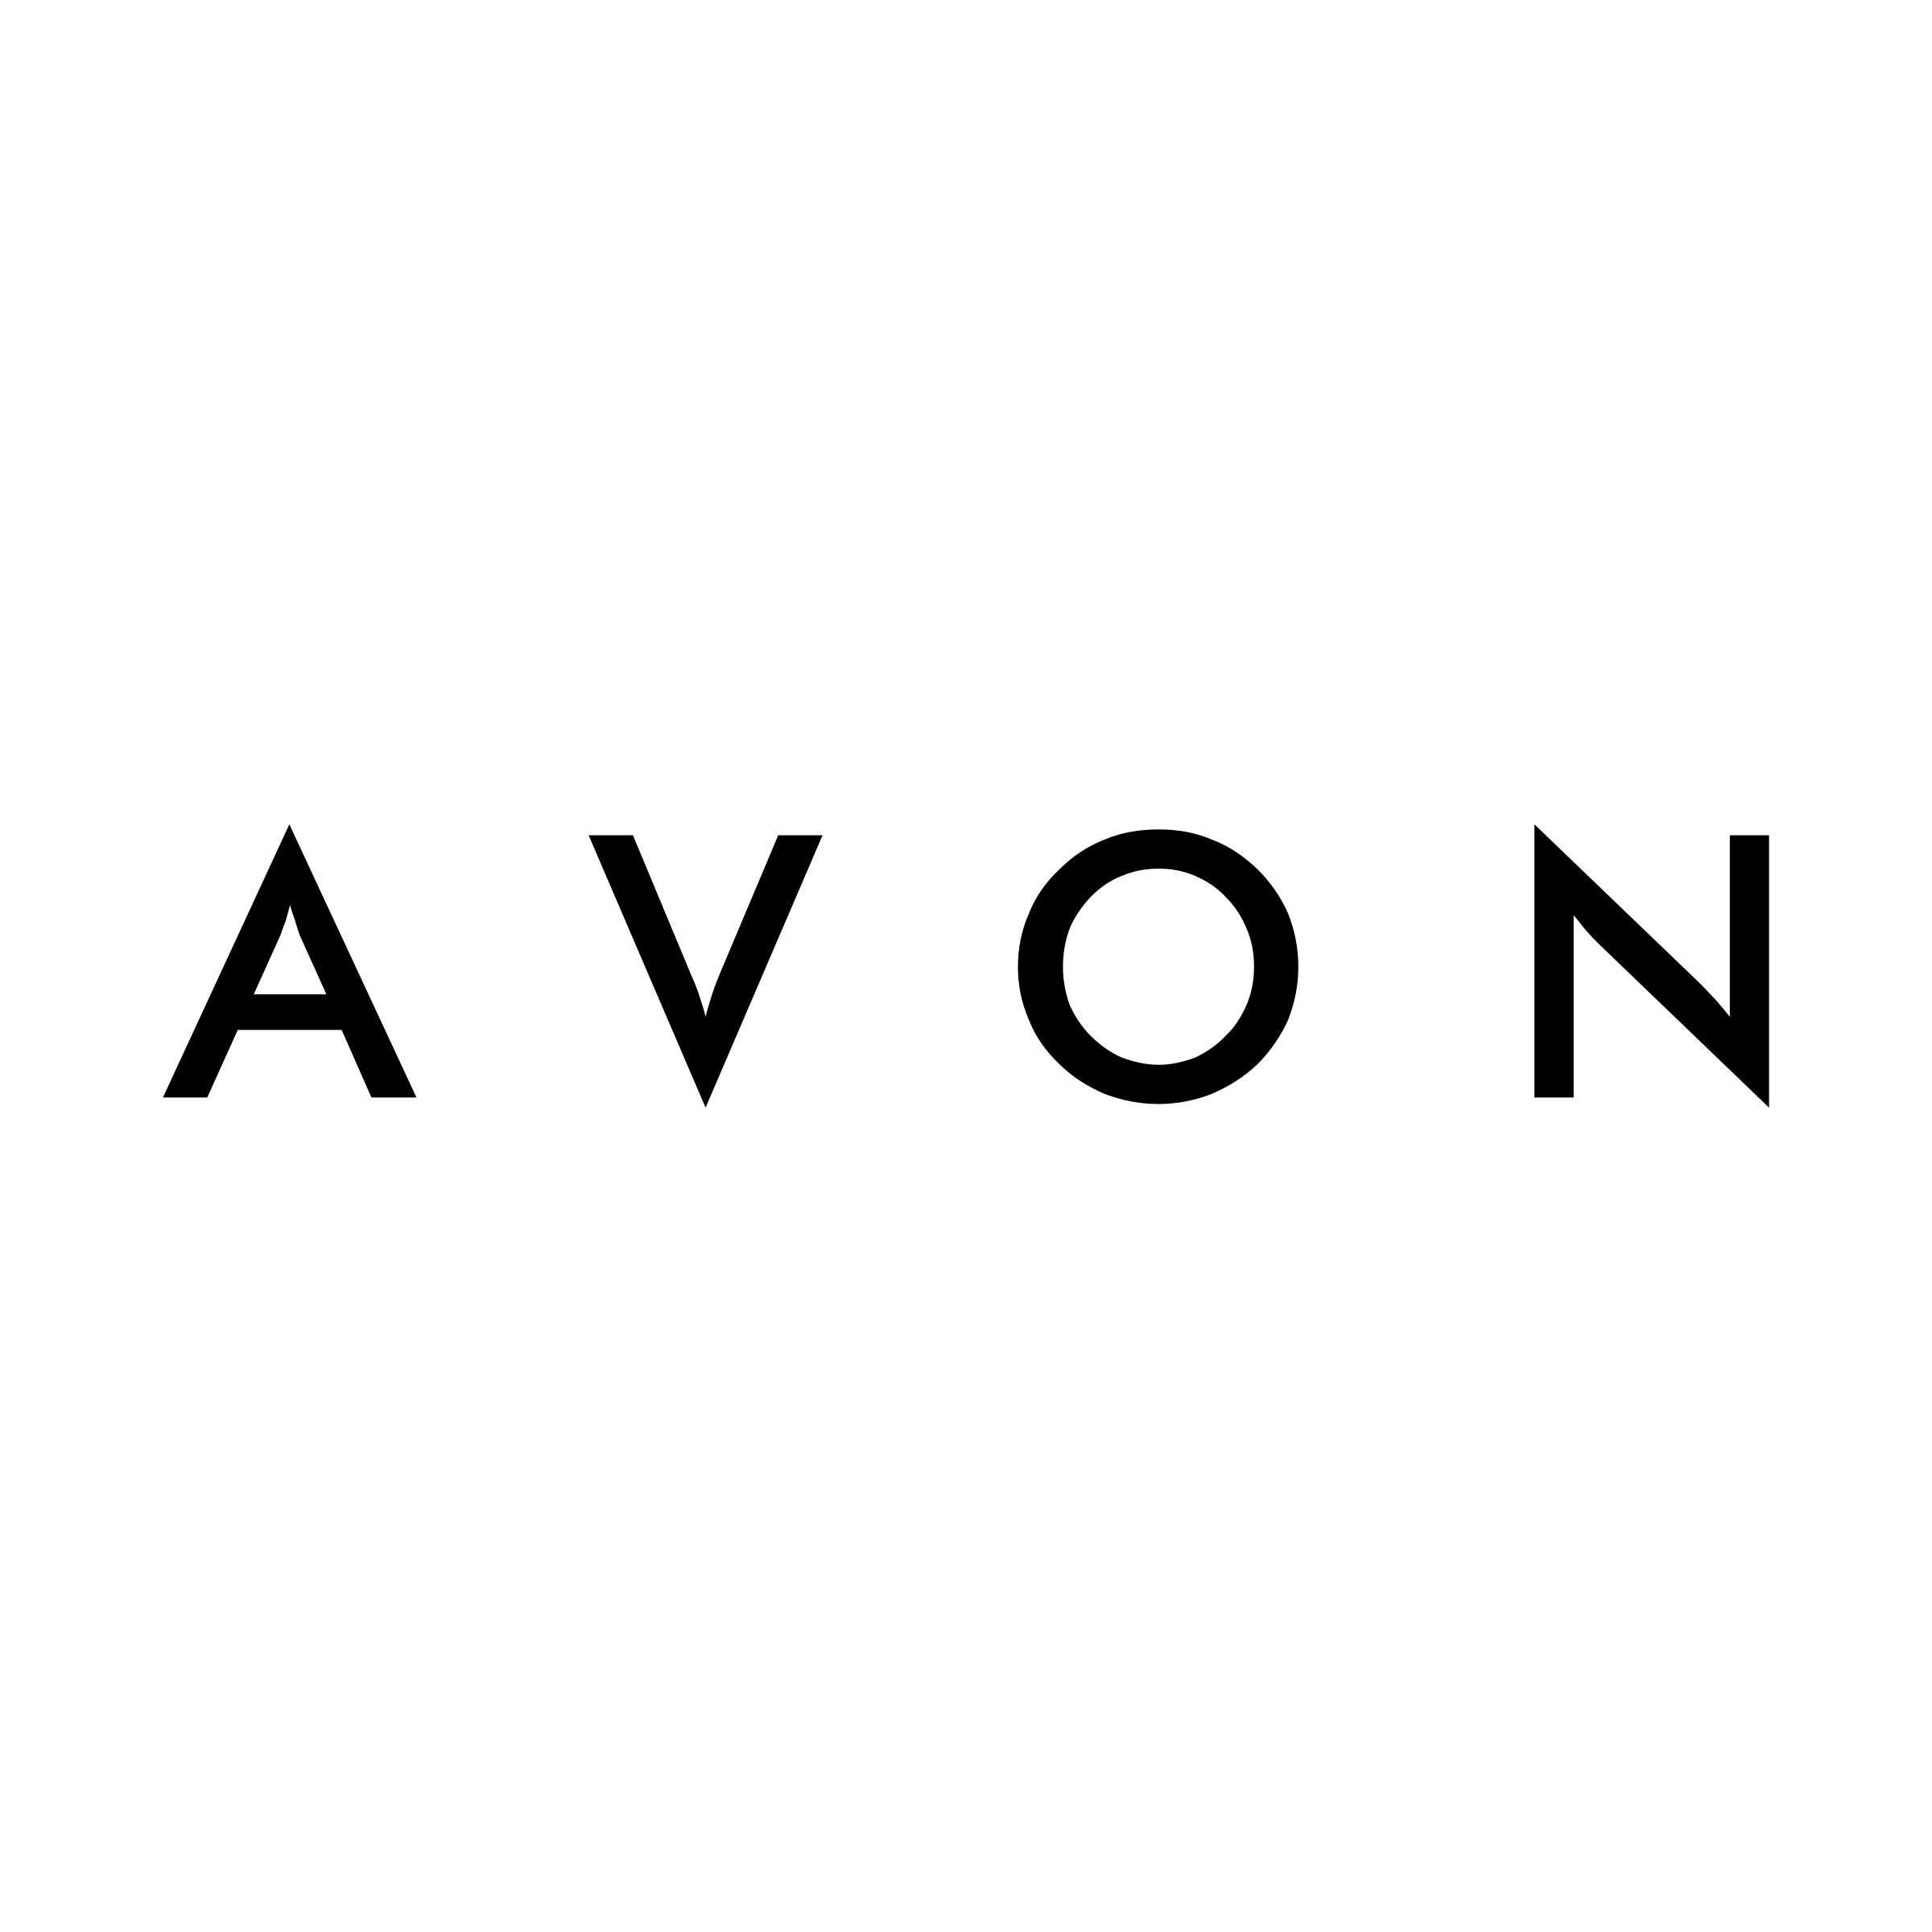 avon-5-logo-png-transparent (1)